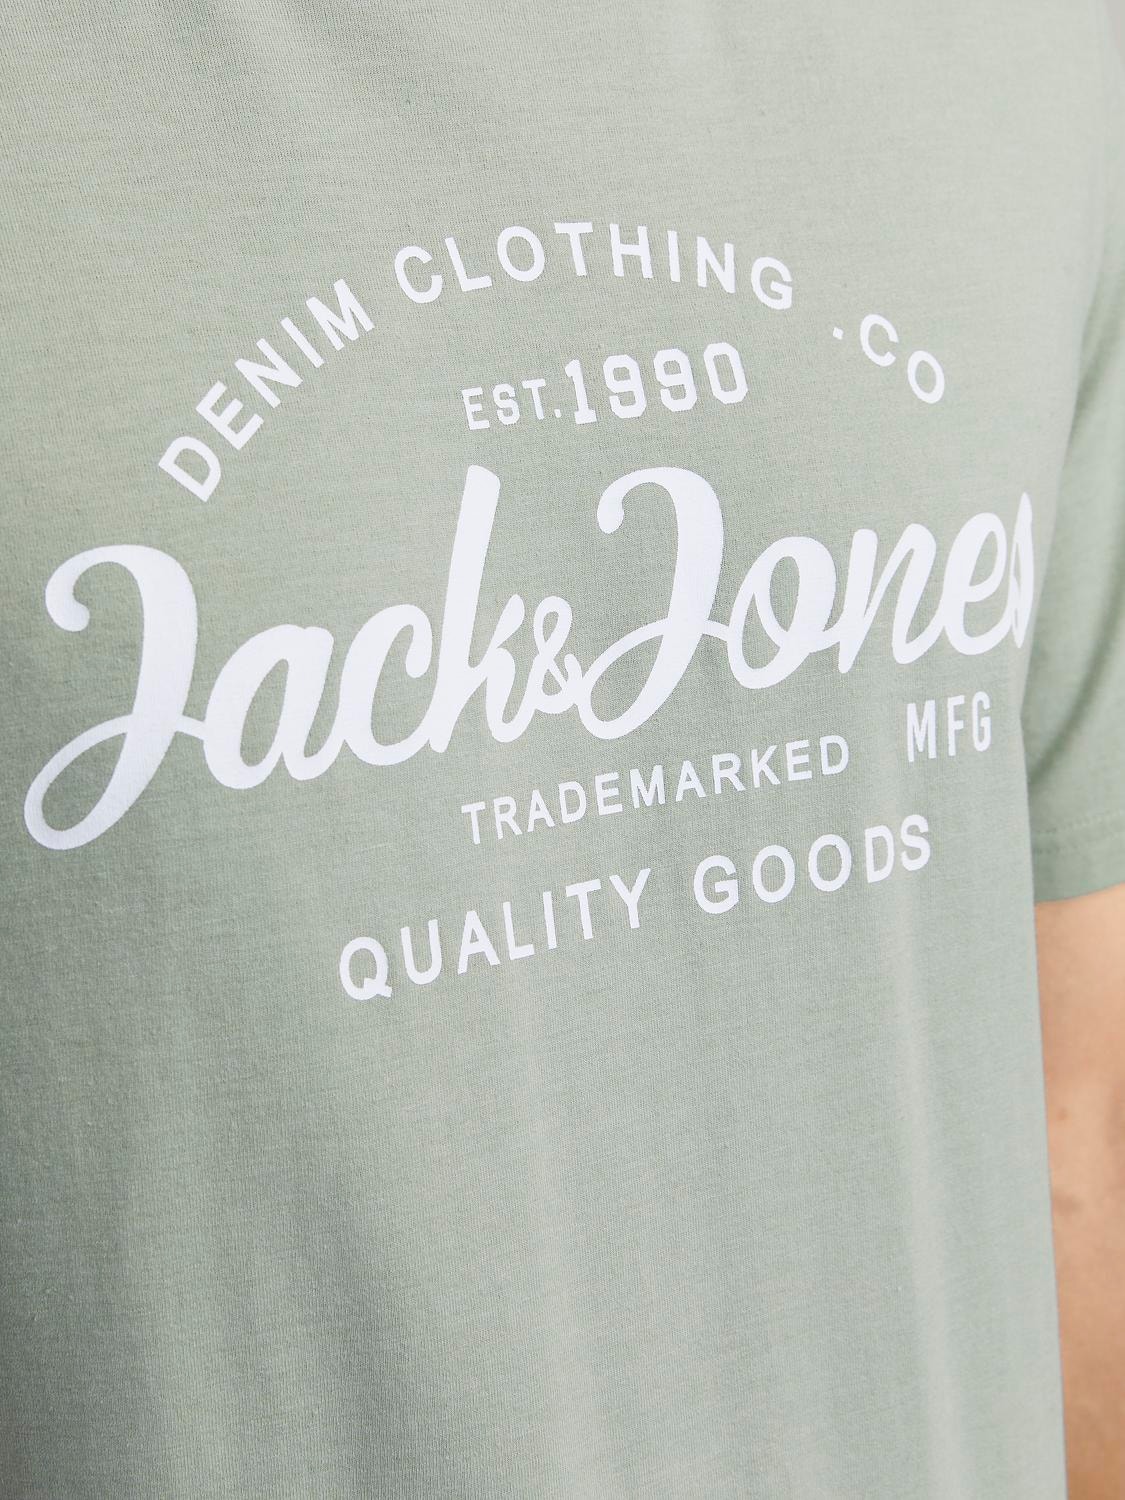 Jack & Jones T-shirt Imprimé Col rond -Desert Sage - 12247972